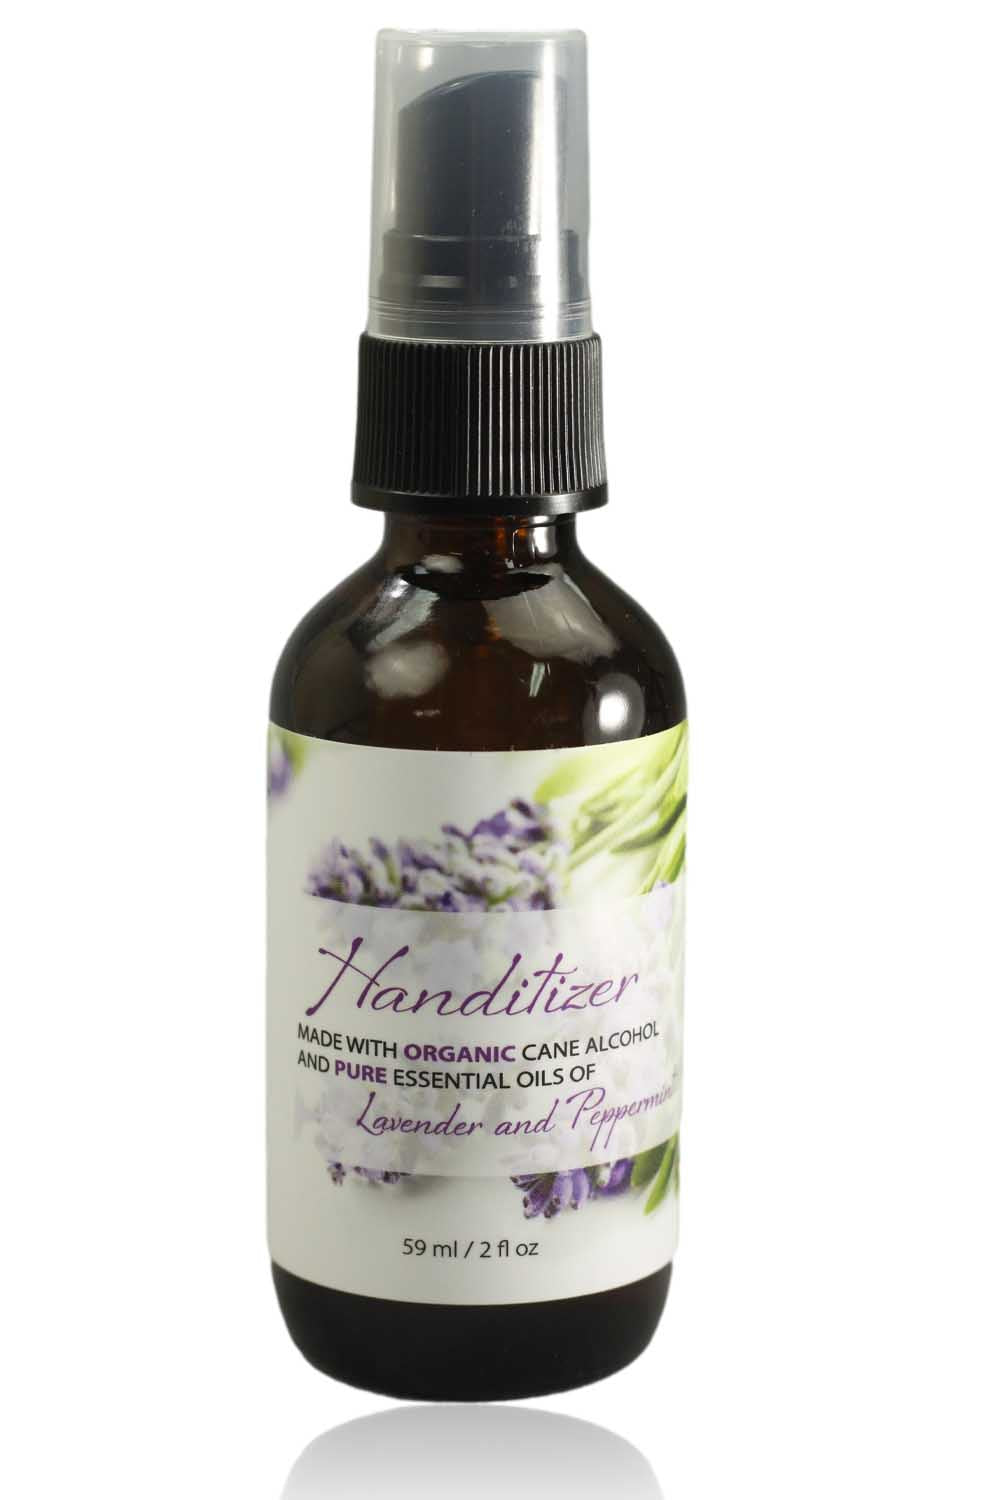 Handitizer-Hand Refresher Spray with 62% Organic Cane Alcohol